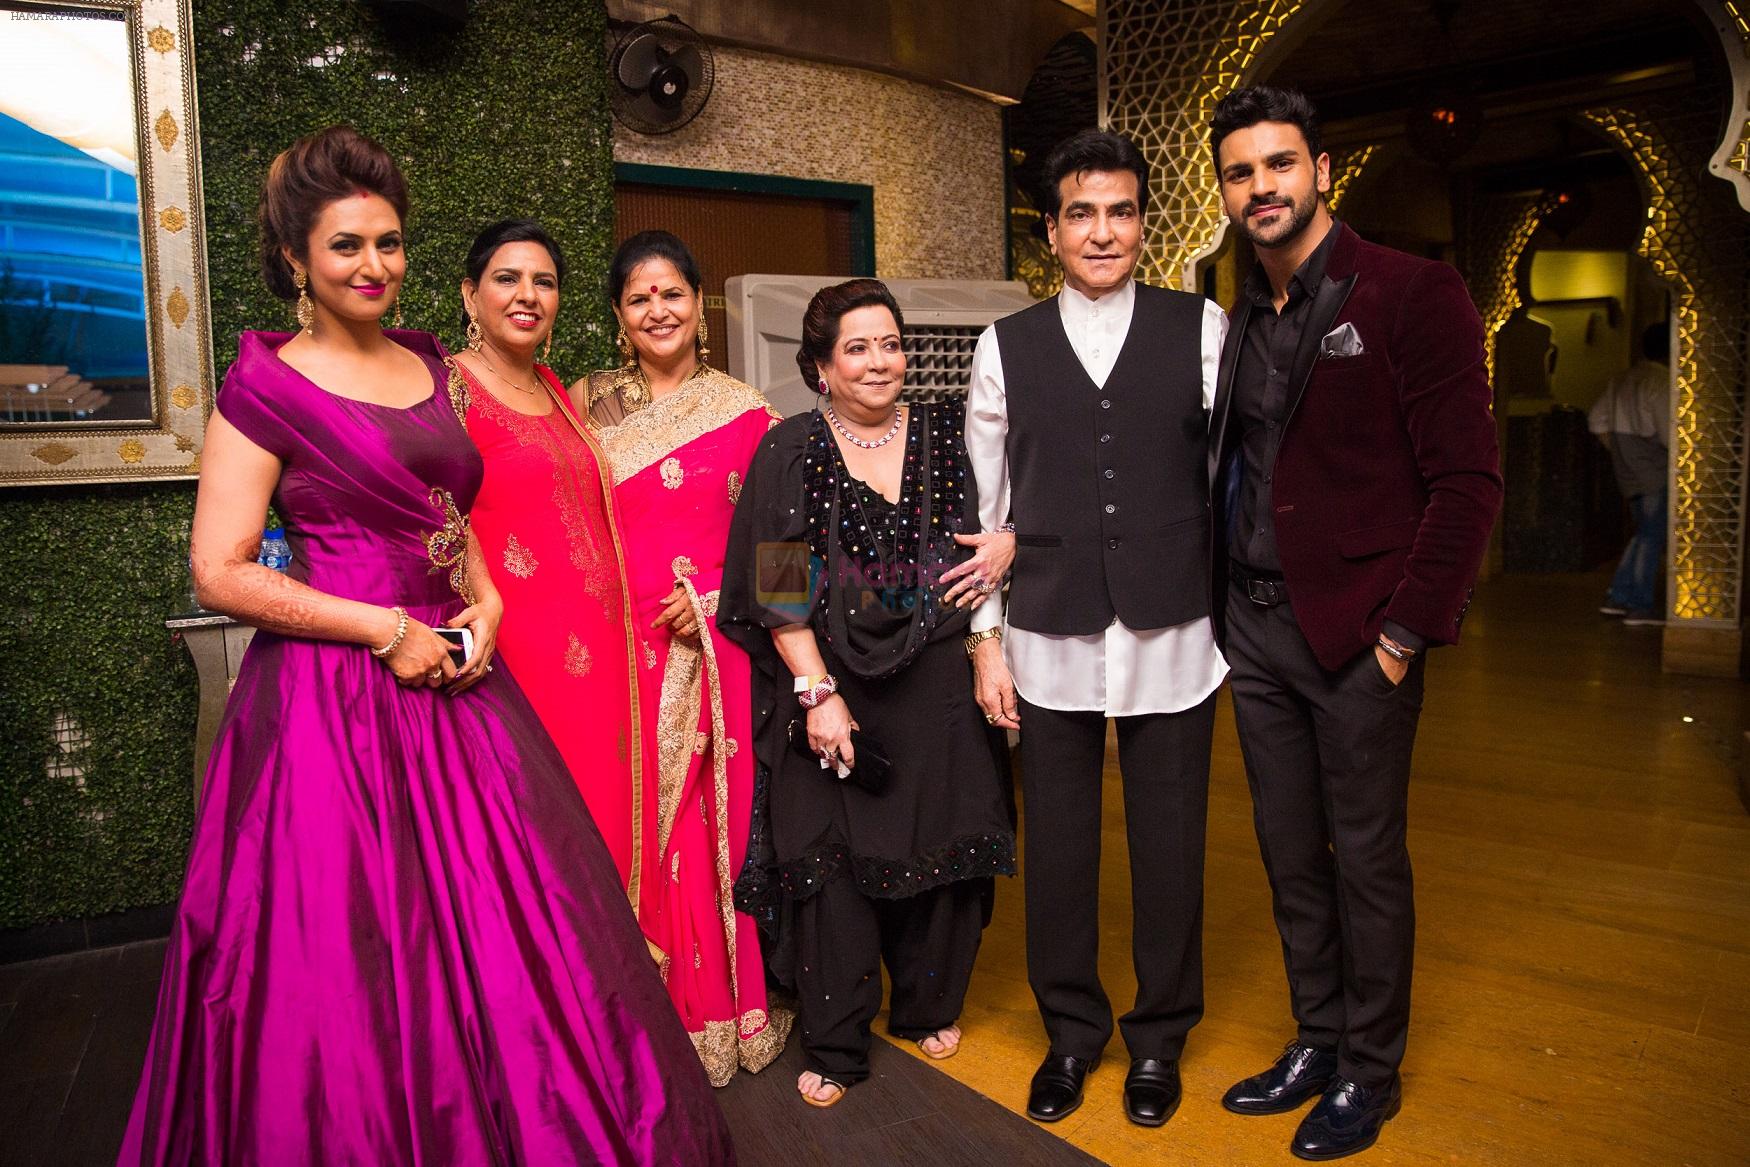 Jeetendra and Shobha Kapoor with Divyanka Tripathi and Vivek Dahiya and their mother at Divyanka-Vivek's Happily Ever After Party in Mumbai on 14th july 2016